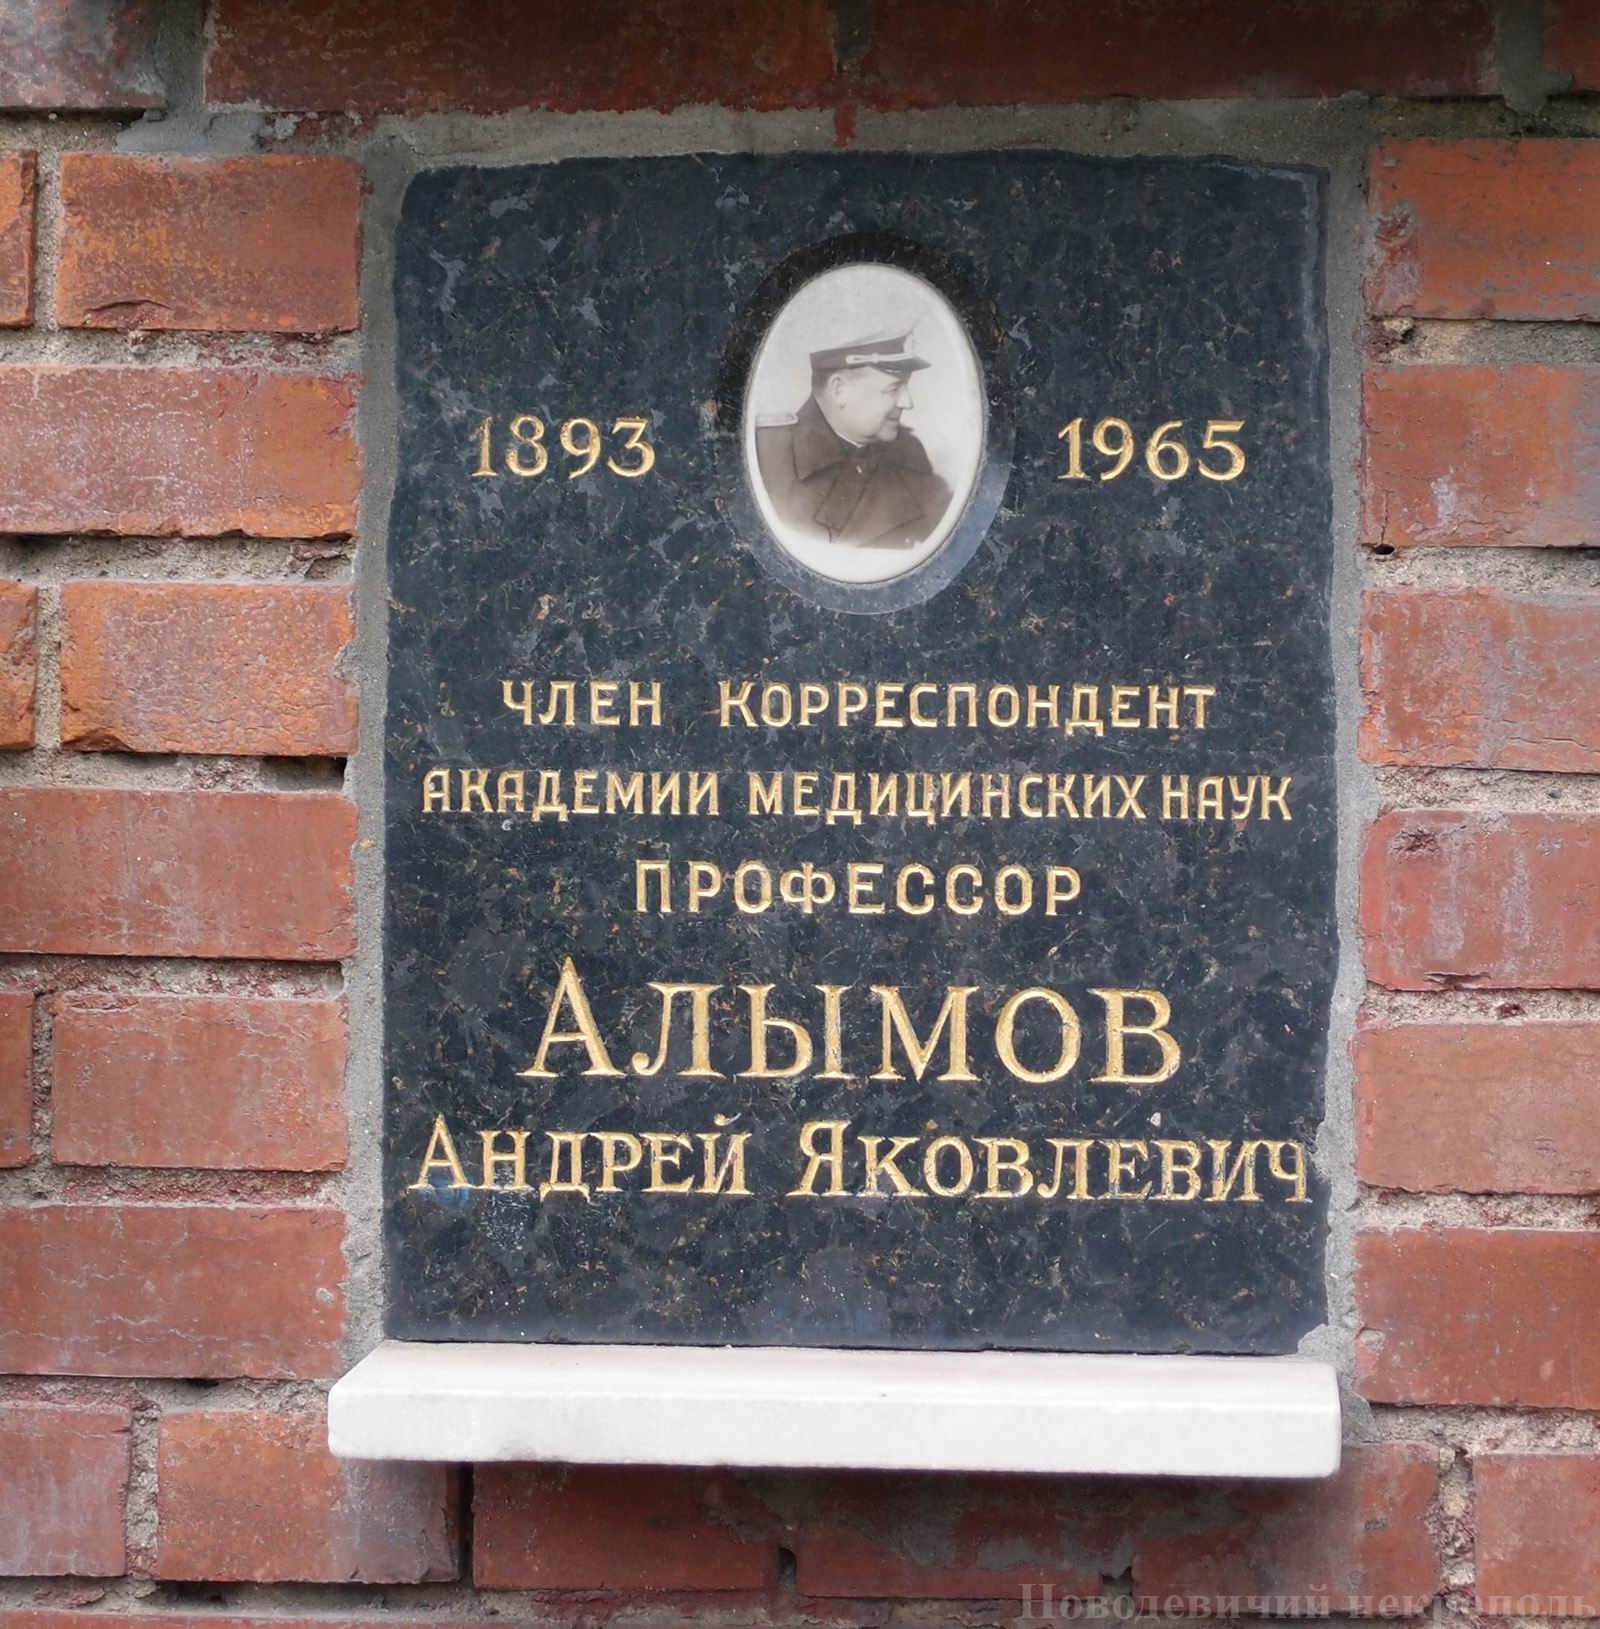 Плита на нише Алымова А.Я. (1893-1965), на Новодевичьем кладбище (колумбарий [127]-26-3).